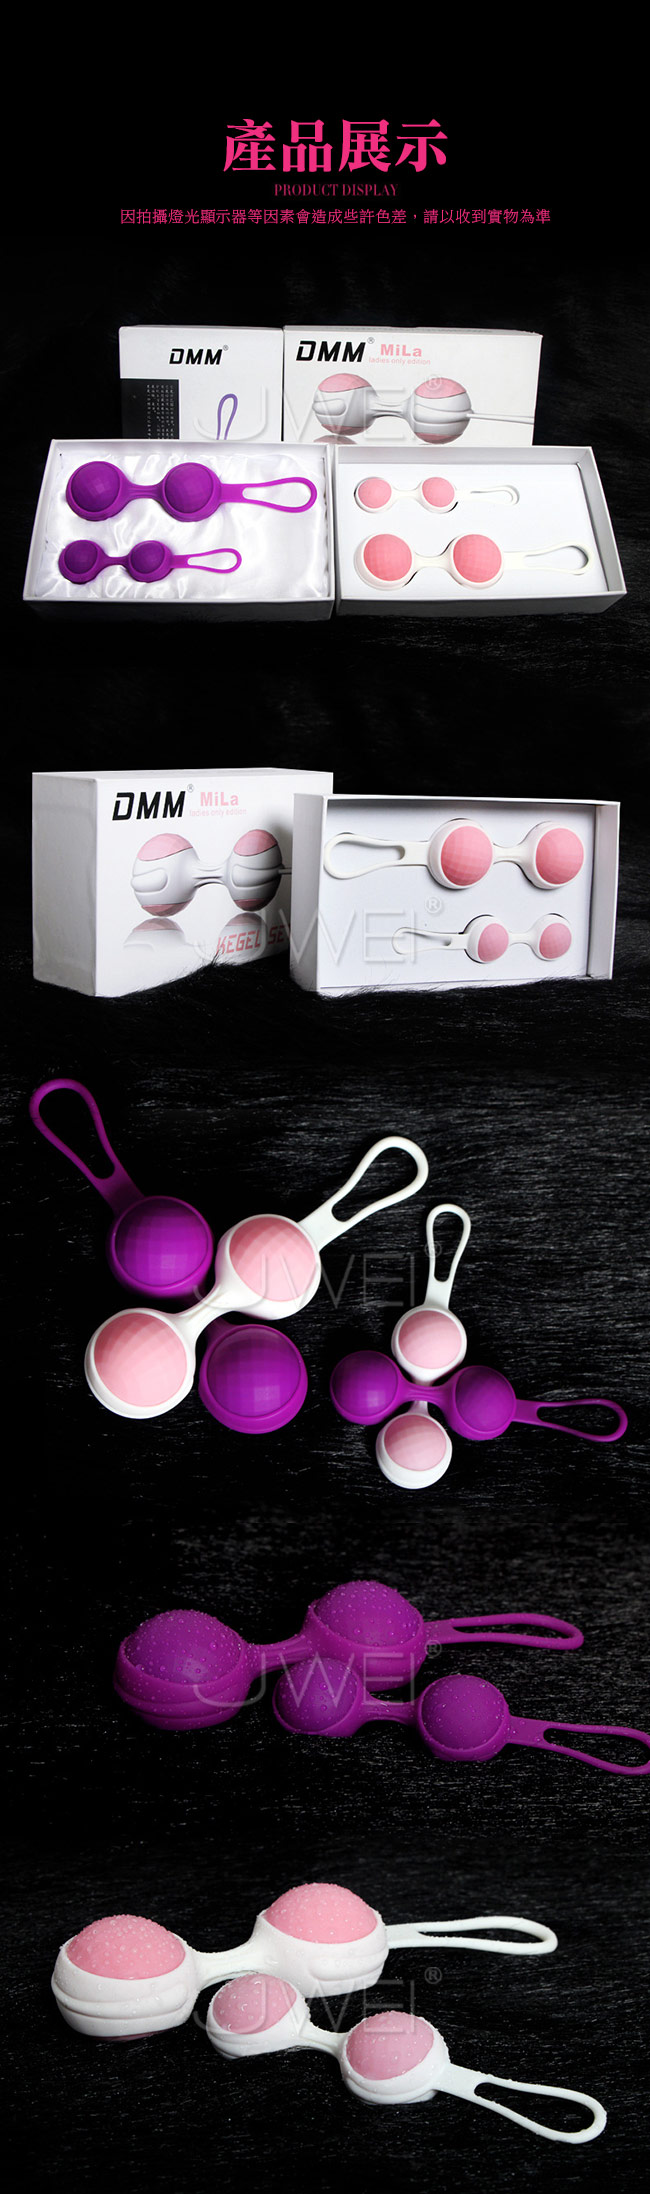 DMM．Mila 階段訓練凱格爾縮陰球套裝組-紫色